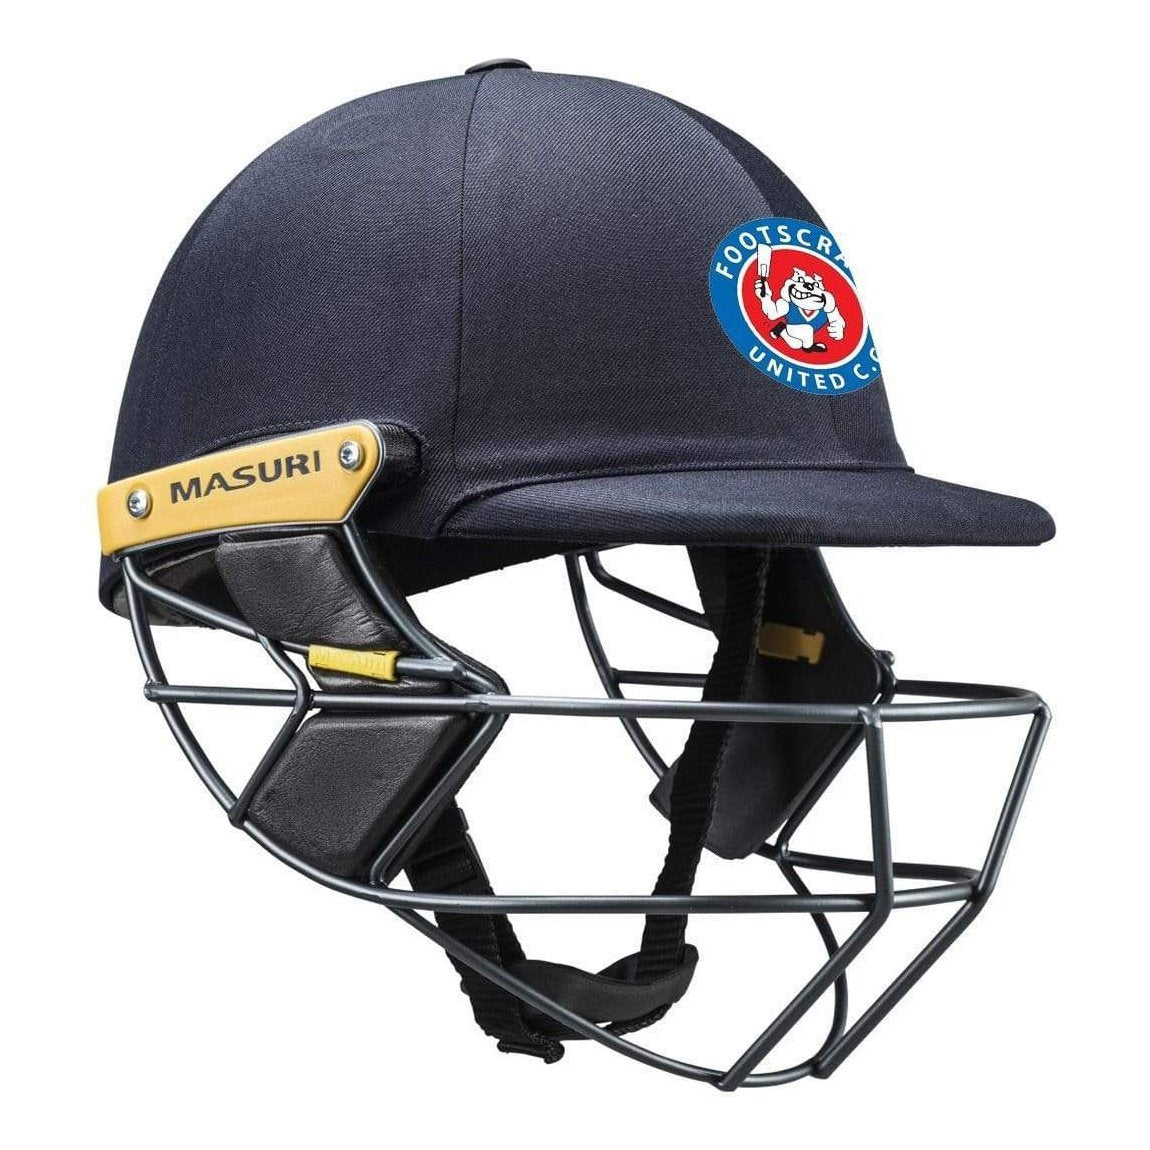 Masuri Club Helmet Footscray United Cricket Club Helmet